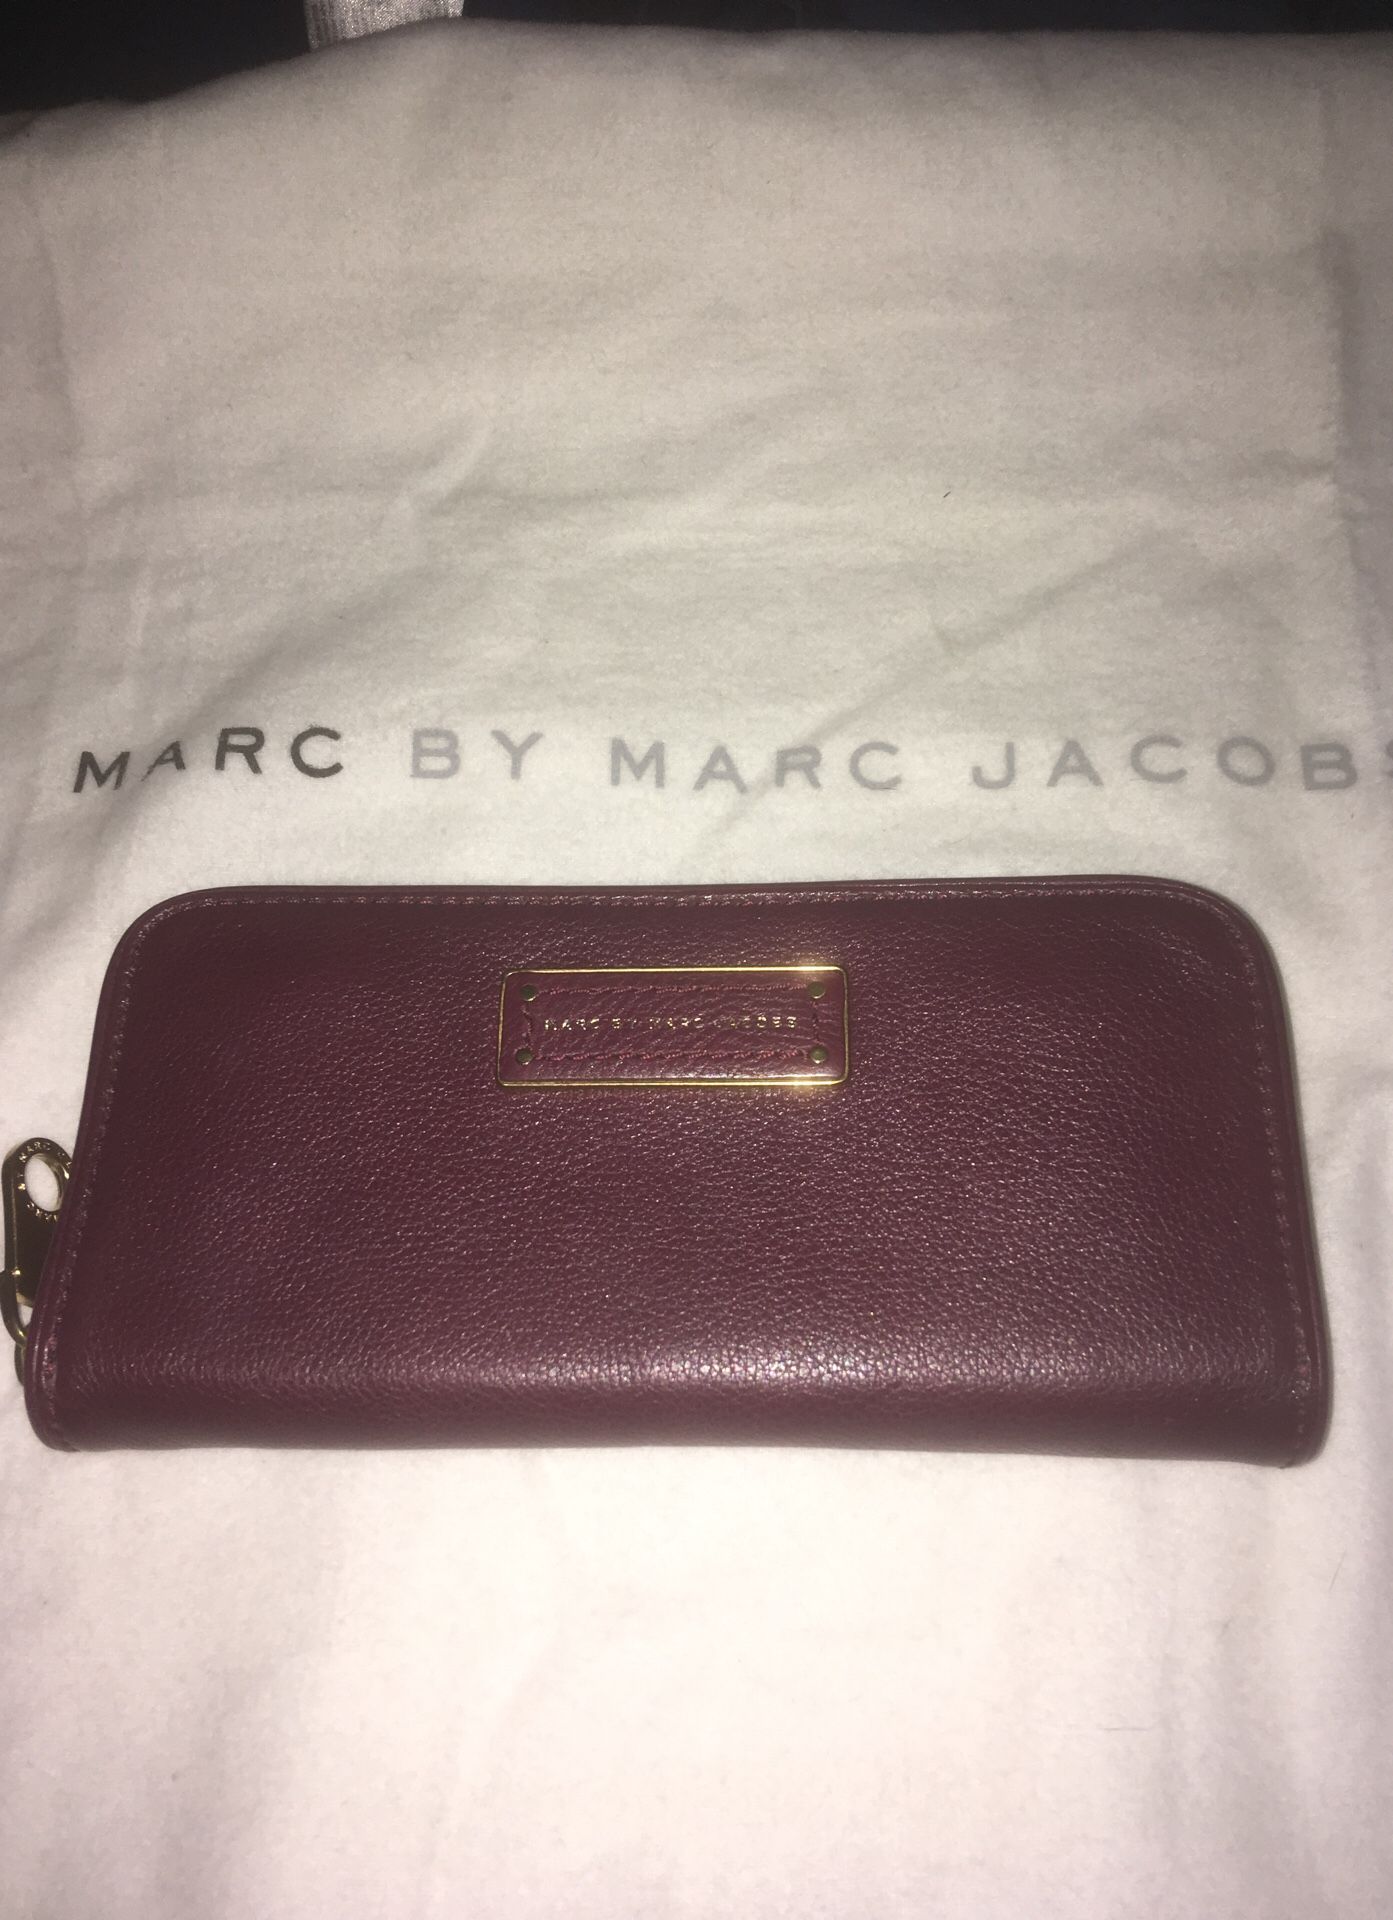 Like new Marc jacobs too hot to handle cardamom burgundy wine leather wallet zip around $228 retail purse bag maroon full size handbag